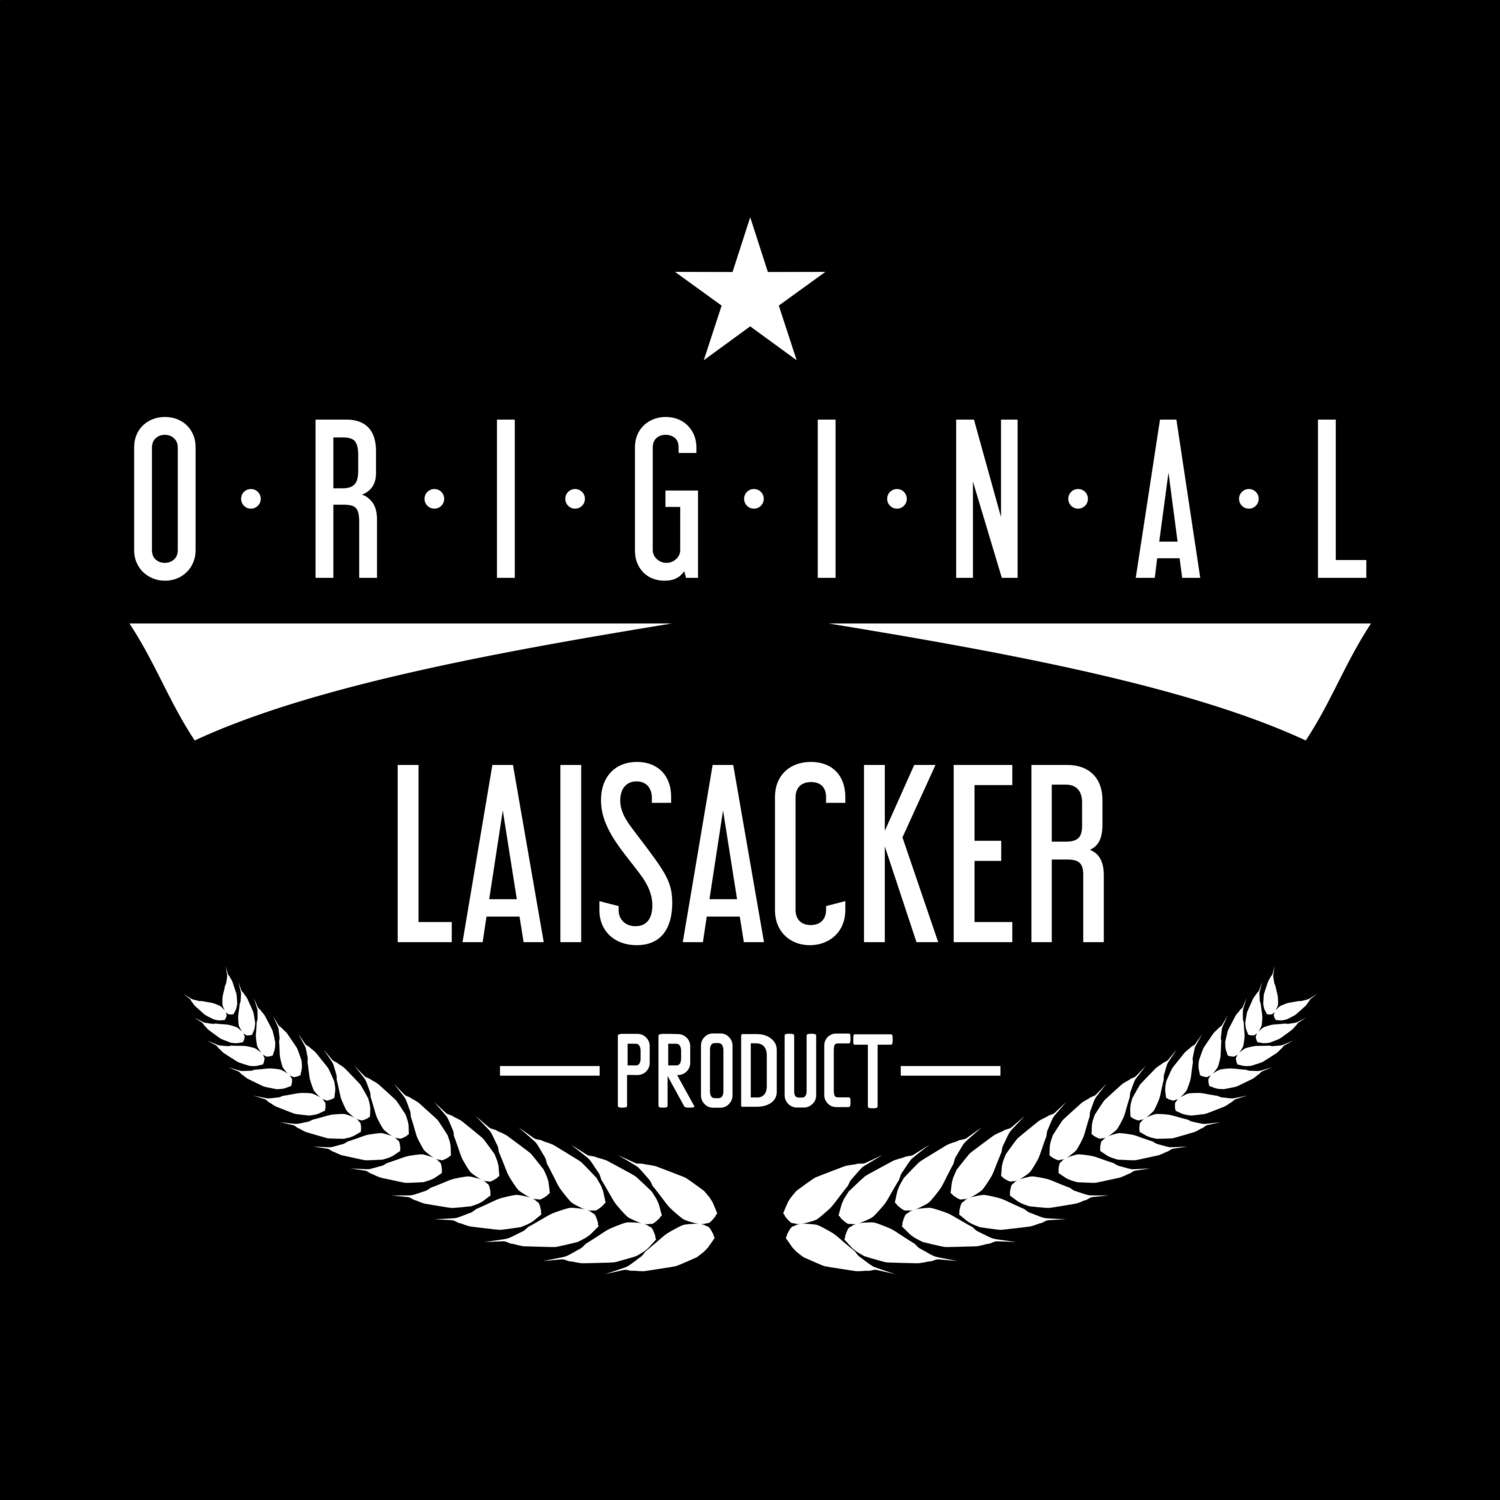 Laisacker T-Shirt »Original Product«